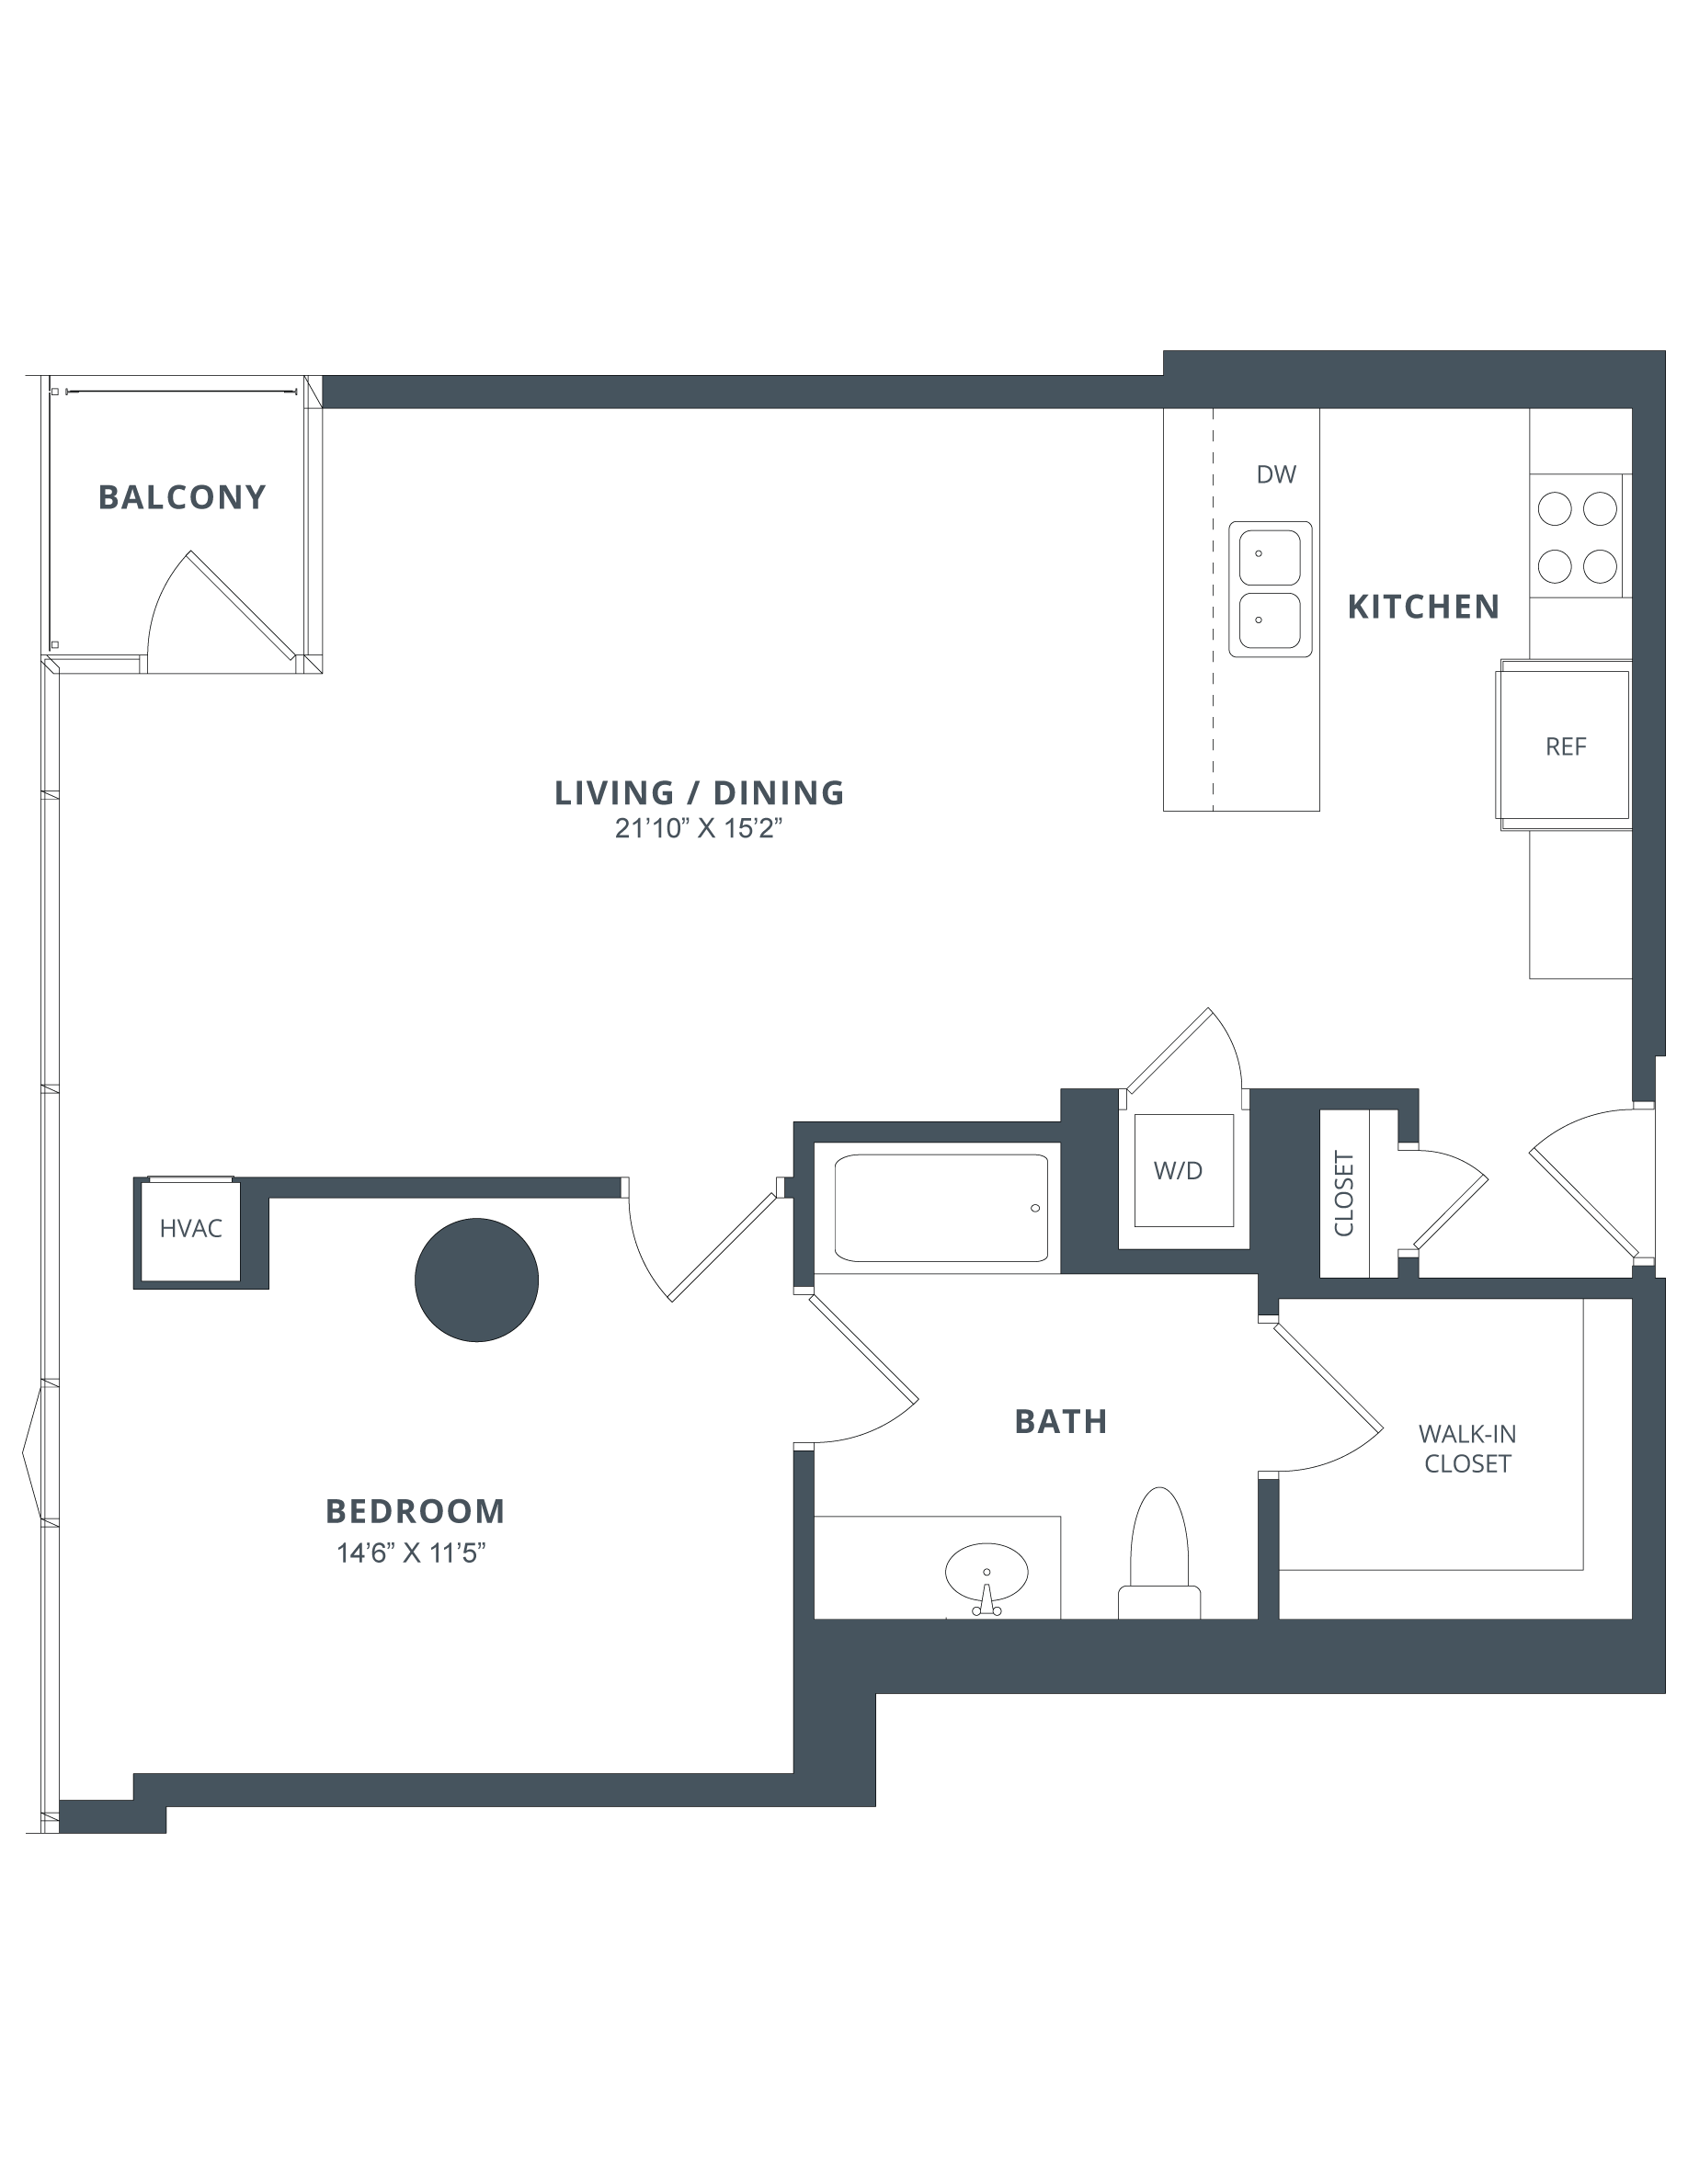 Apartment 2706 floorplan